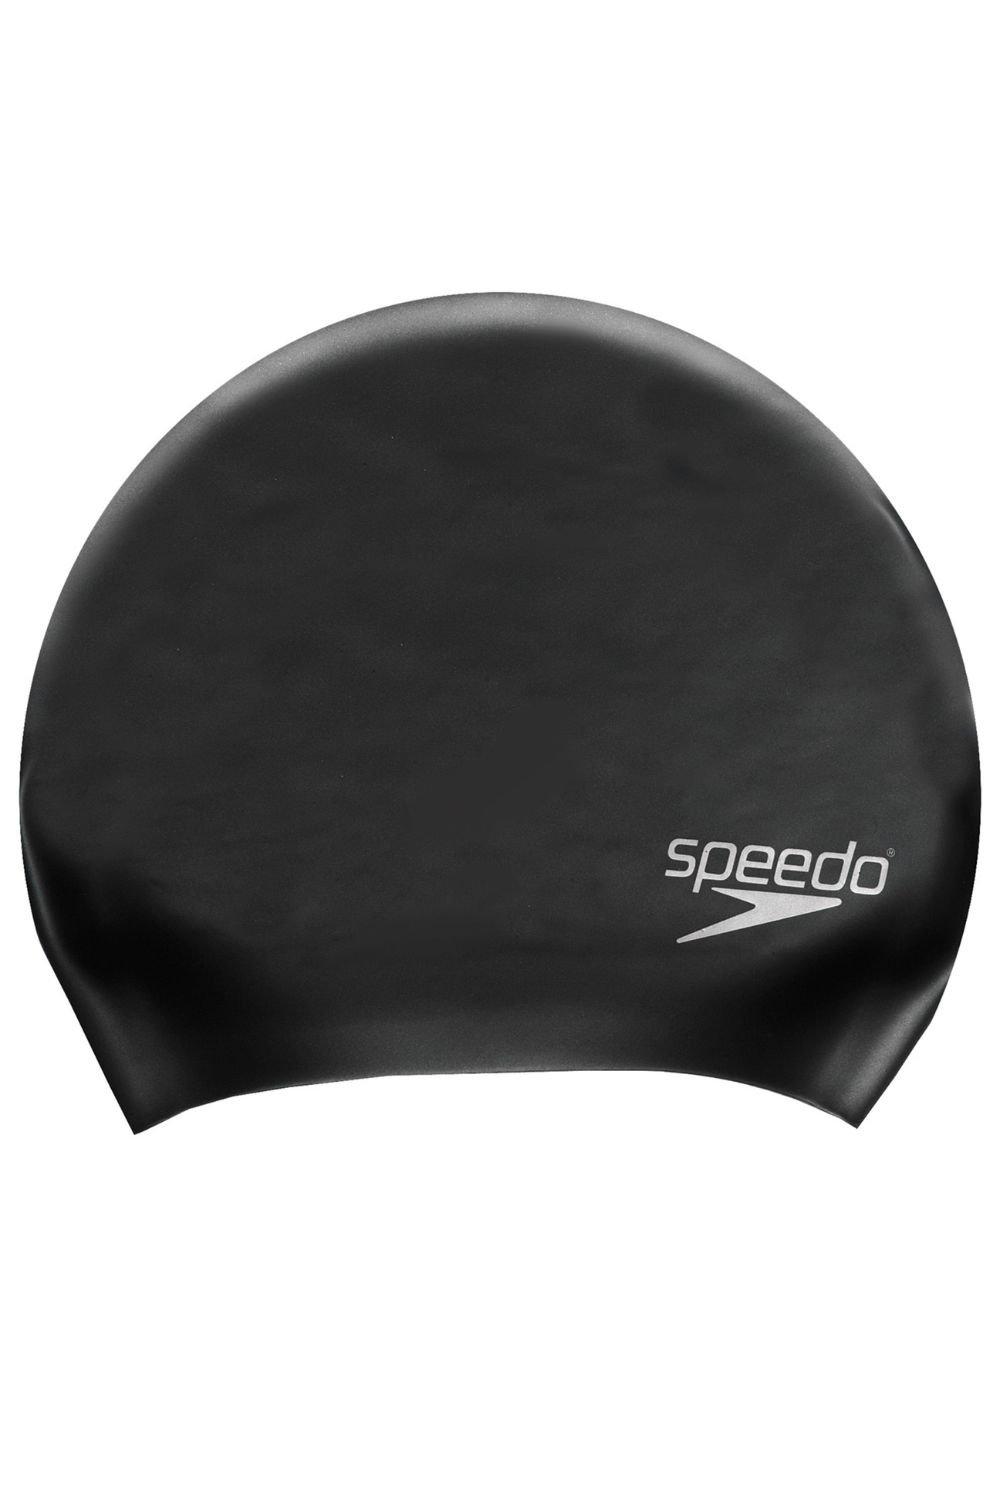 Speedo Long Hair Swim Cap - 150 NoSz - NoSz